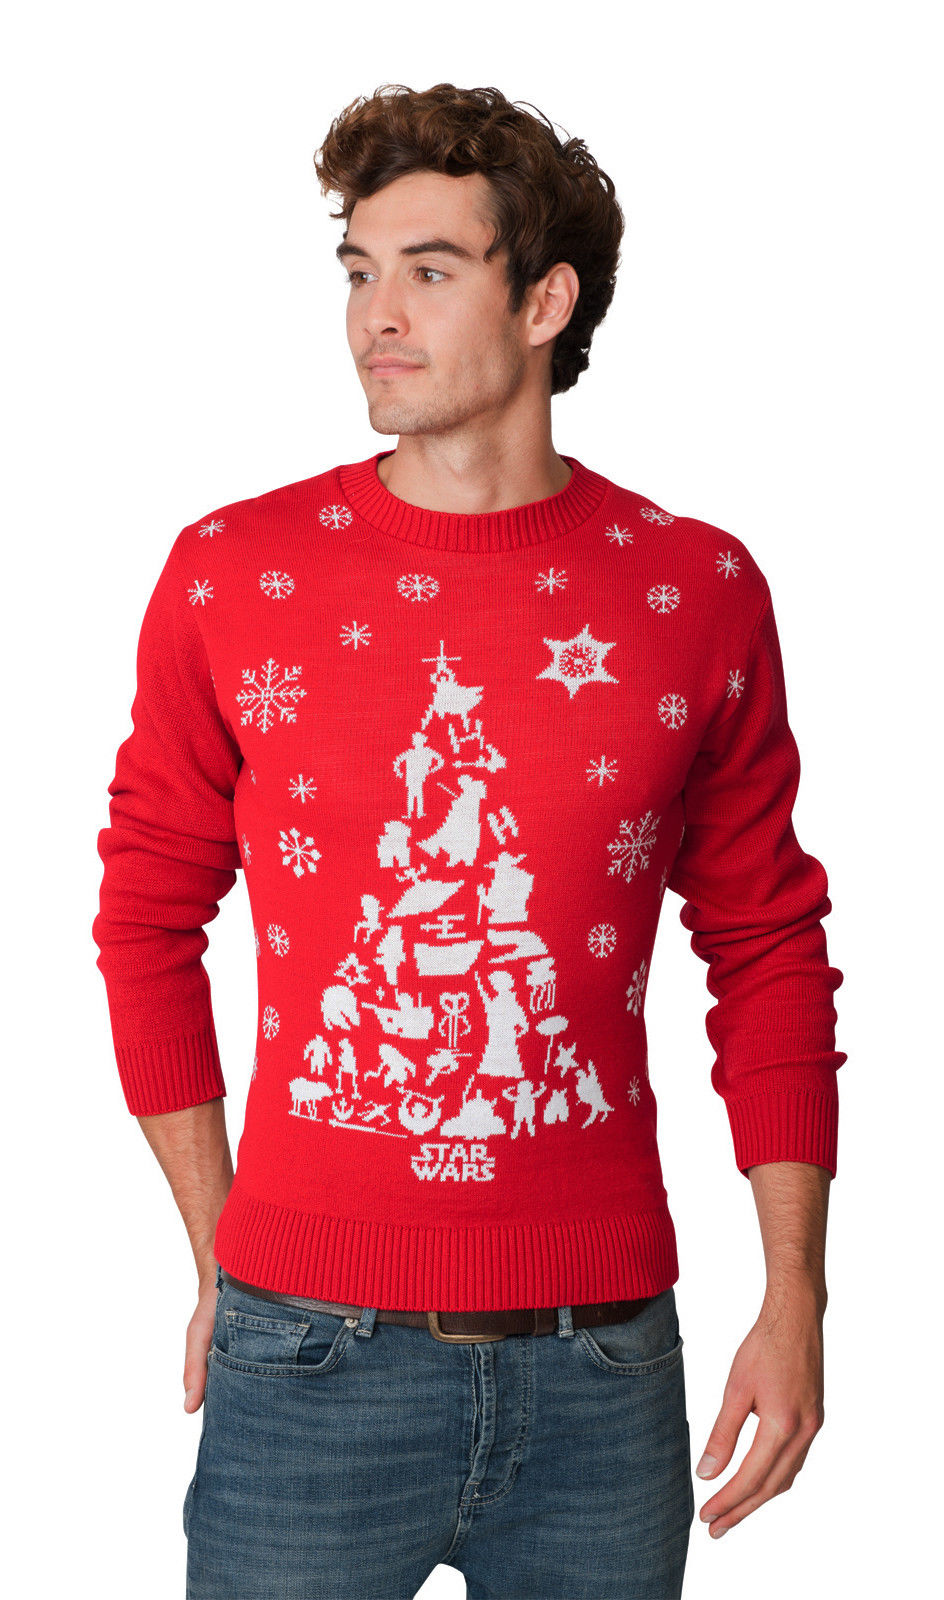  Star Wars vánoční svetr